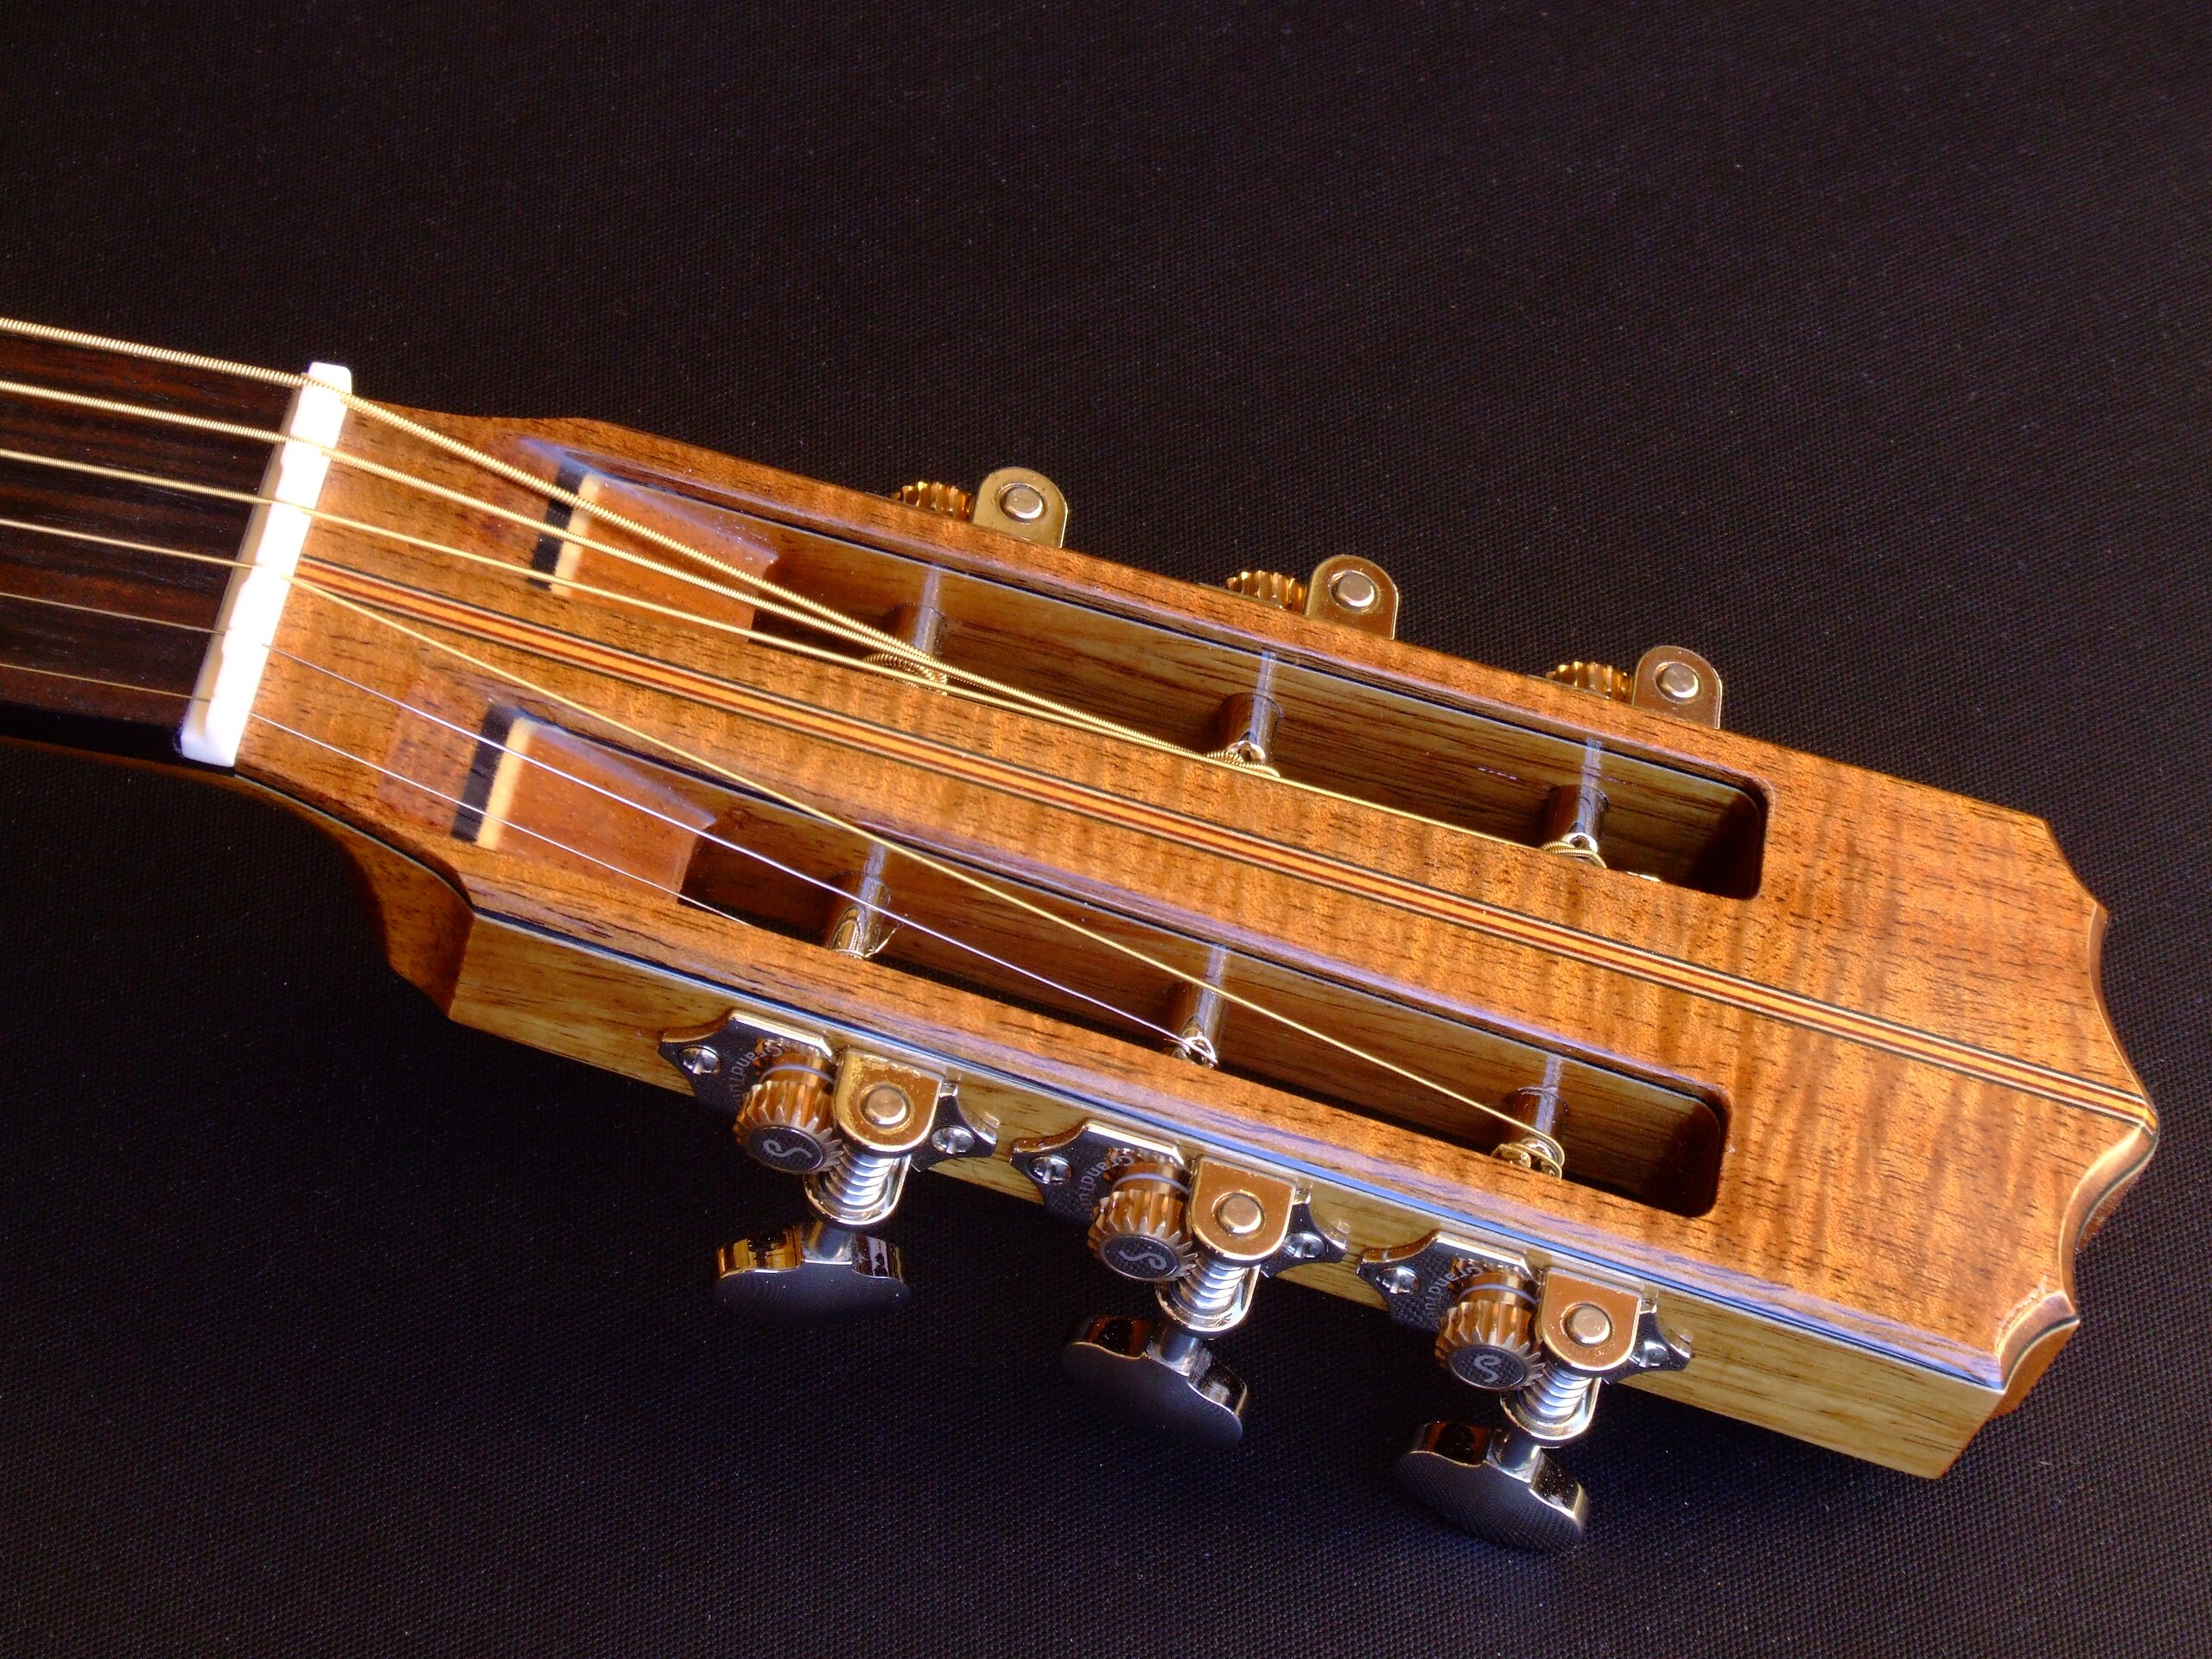 Slot headstock on a steel string guitar